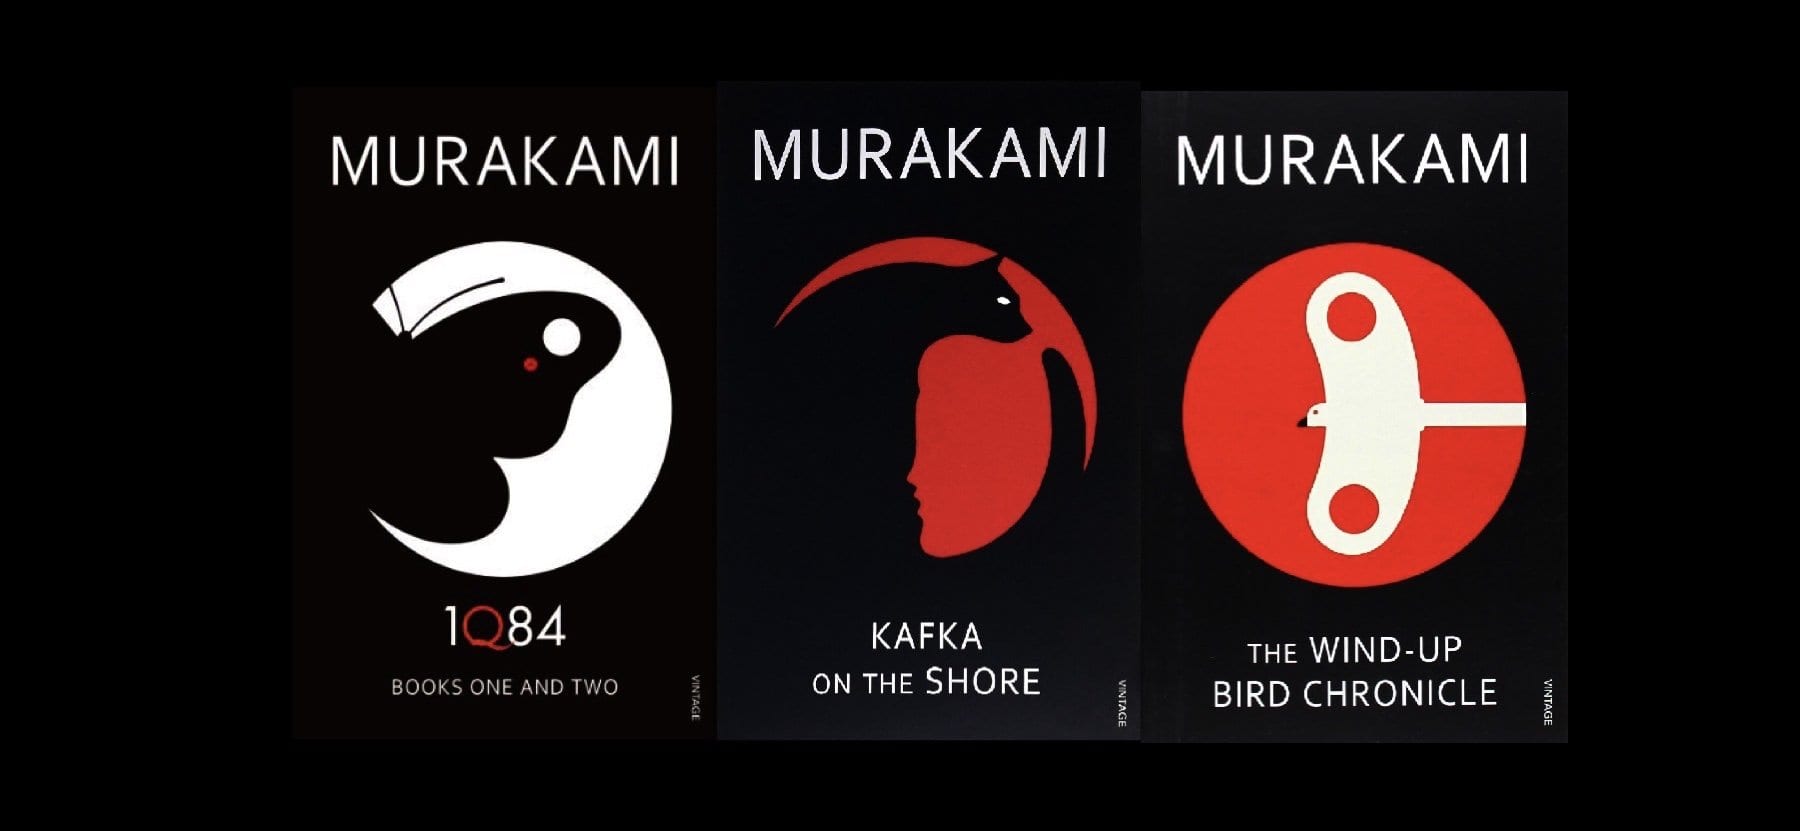 Murakami - 1Q84, Kafka on the Shore, The Wind-Up Bird Chronicle